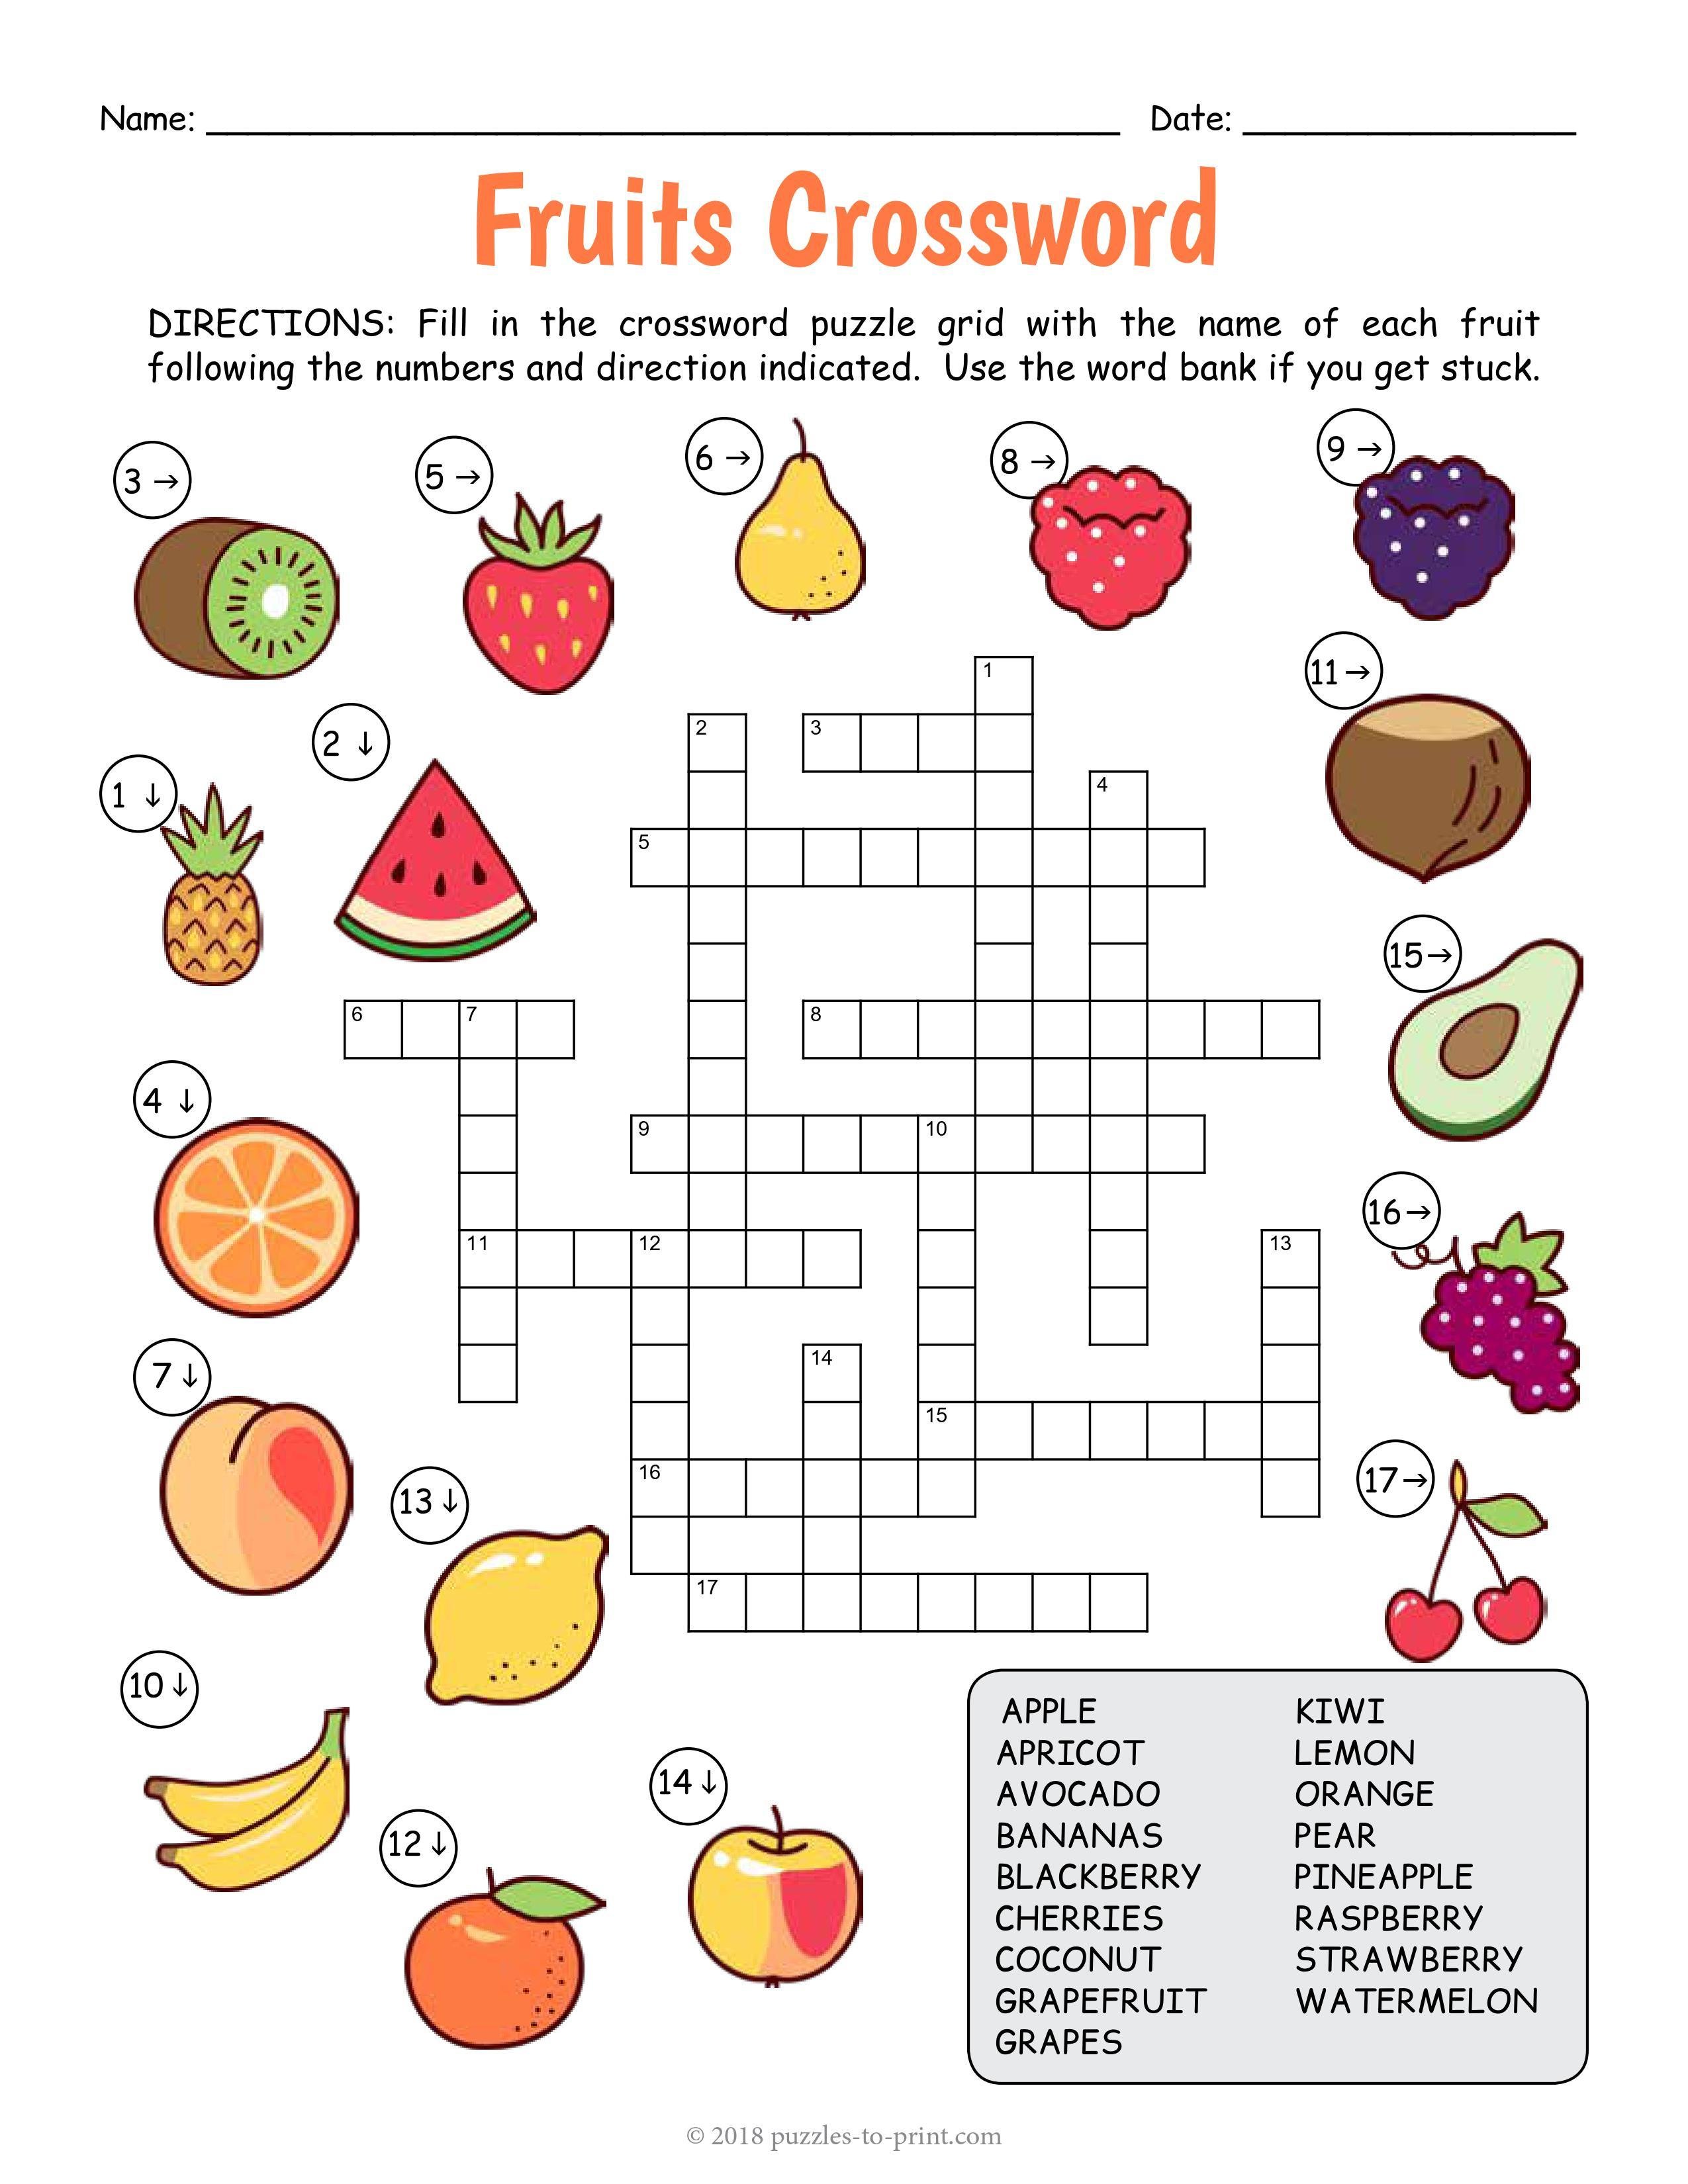 Grammar corner Free Printable Fruits Crossword